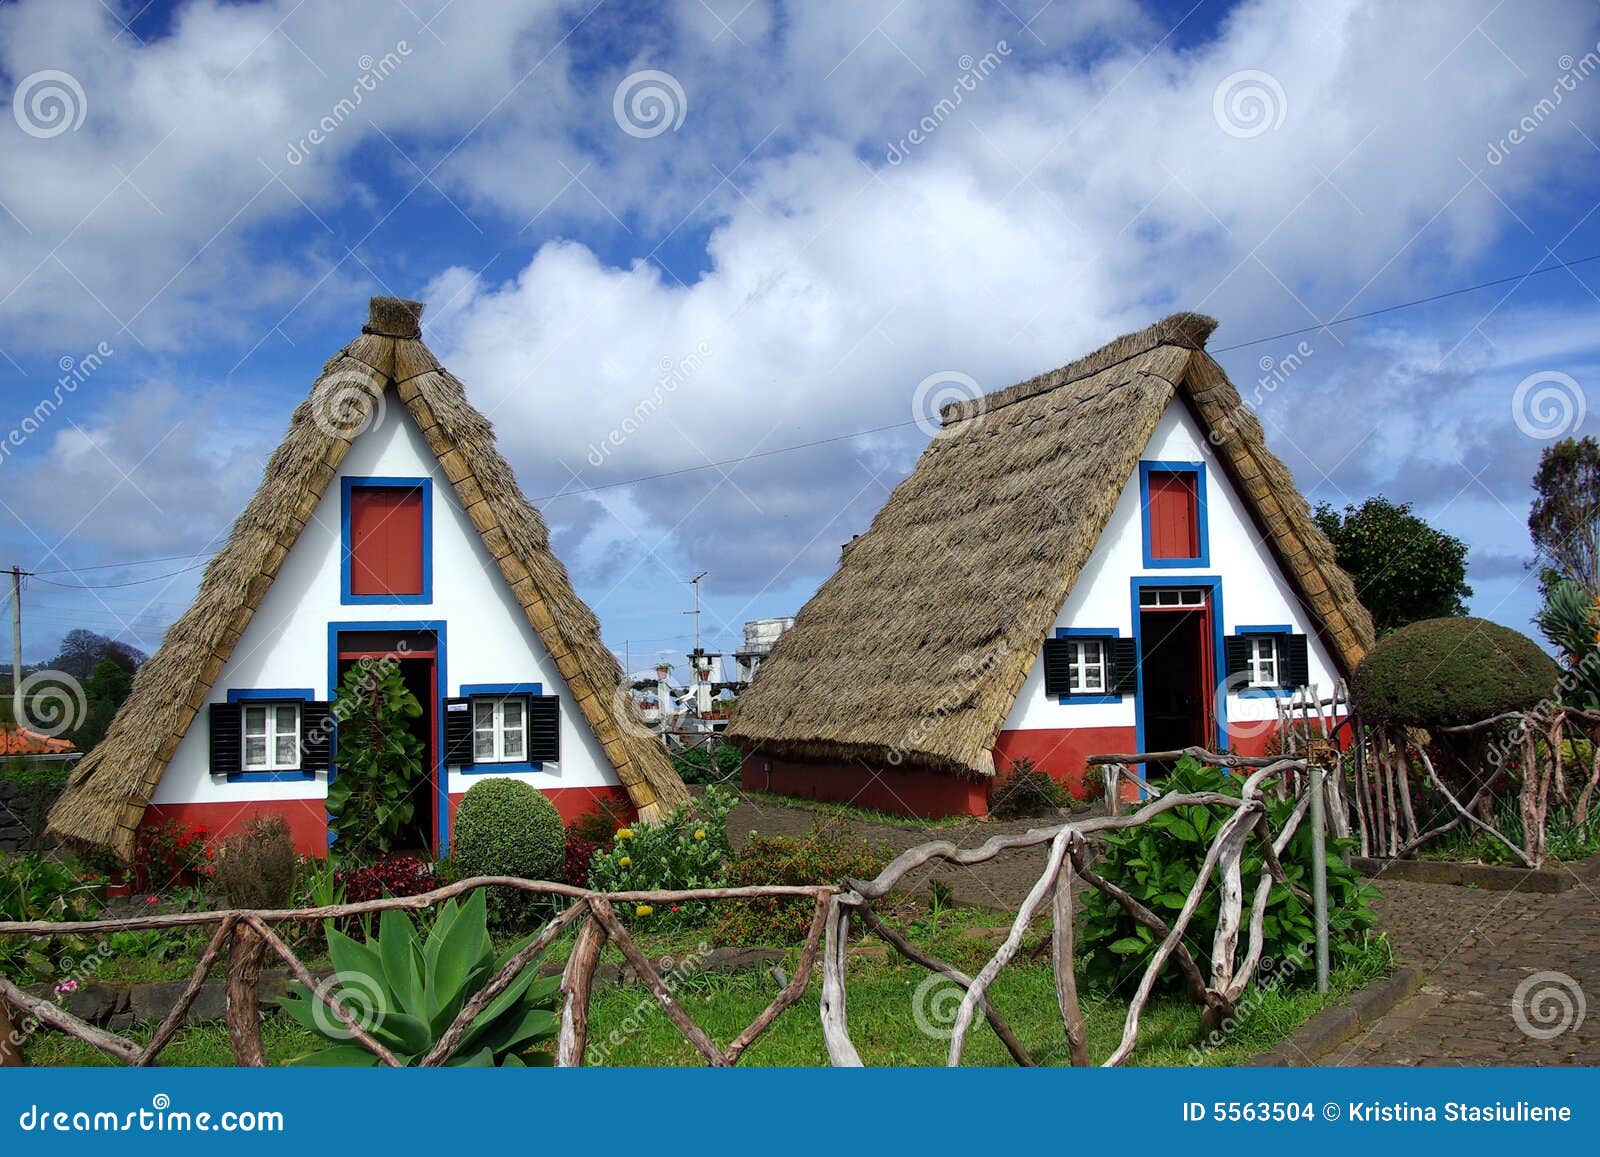 madeira houses